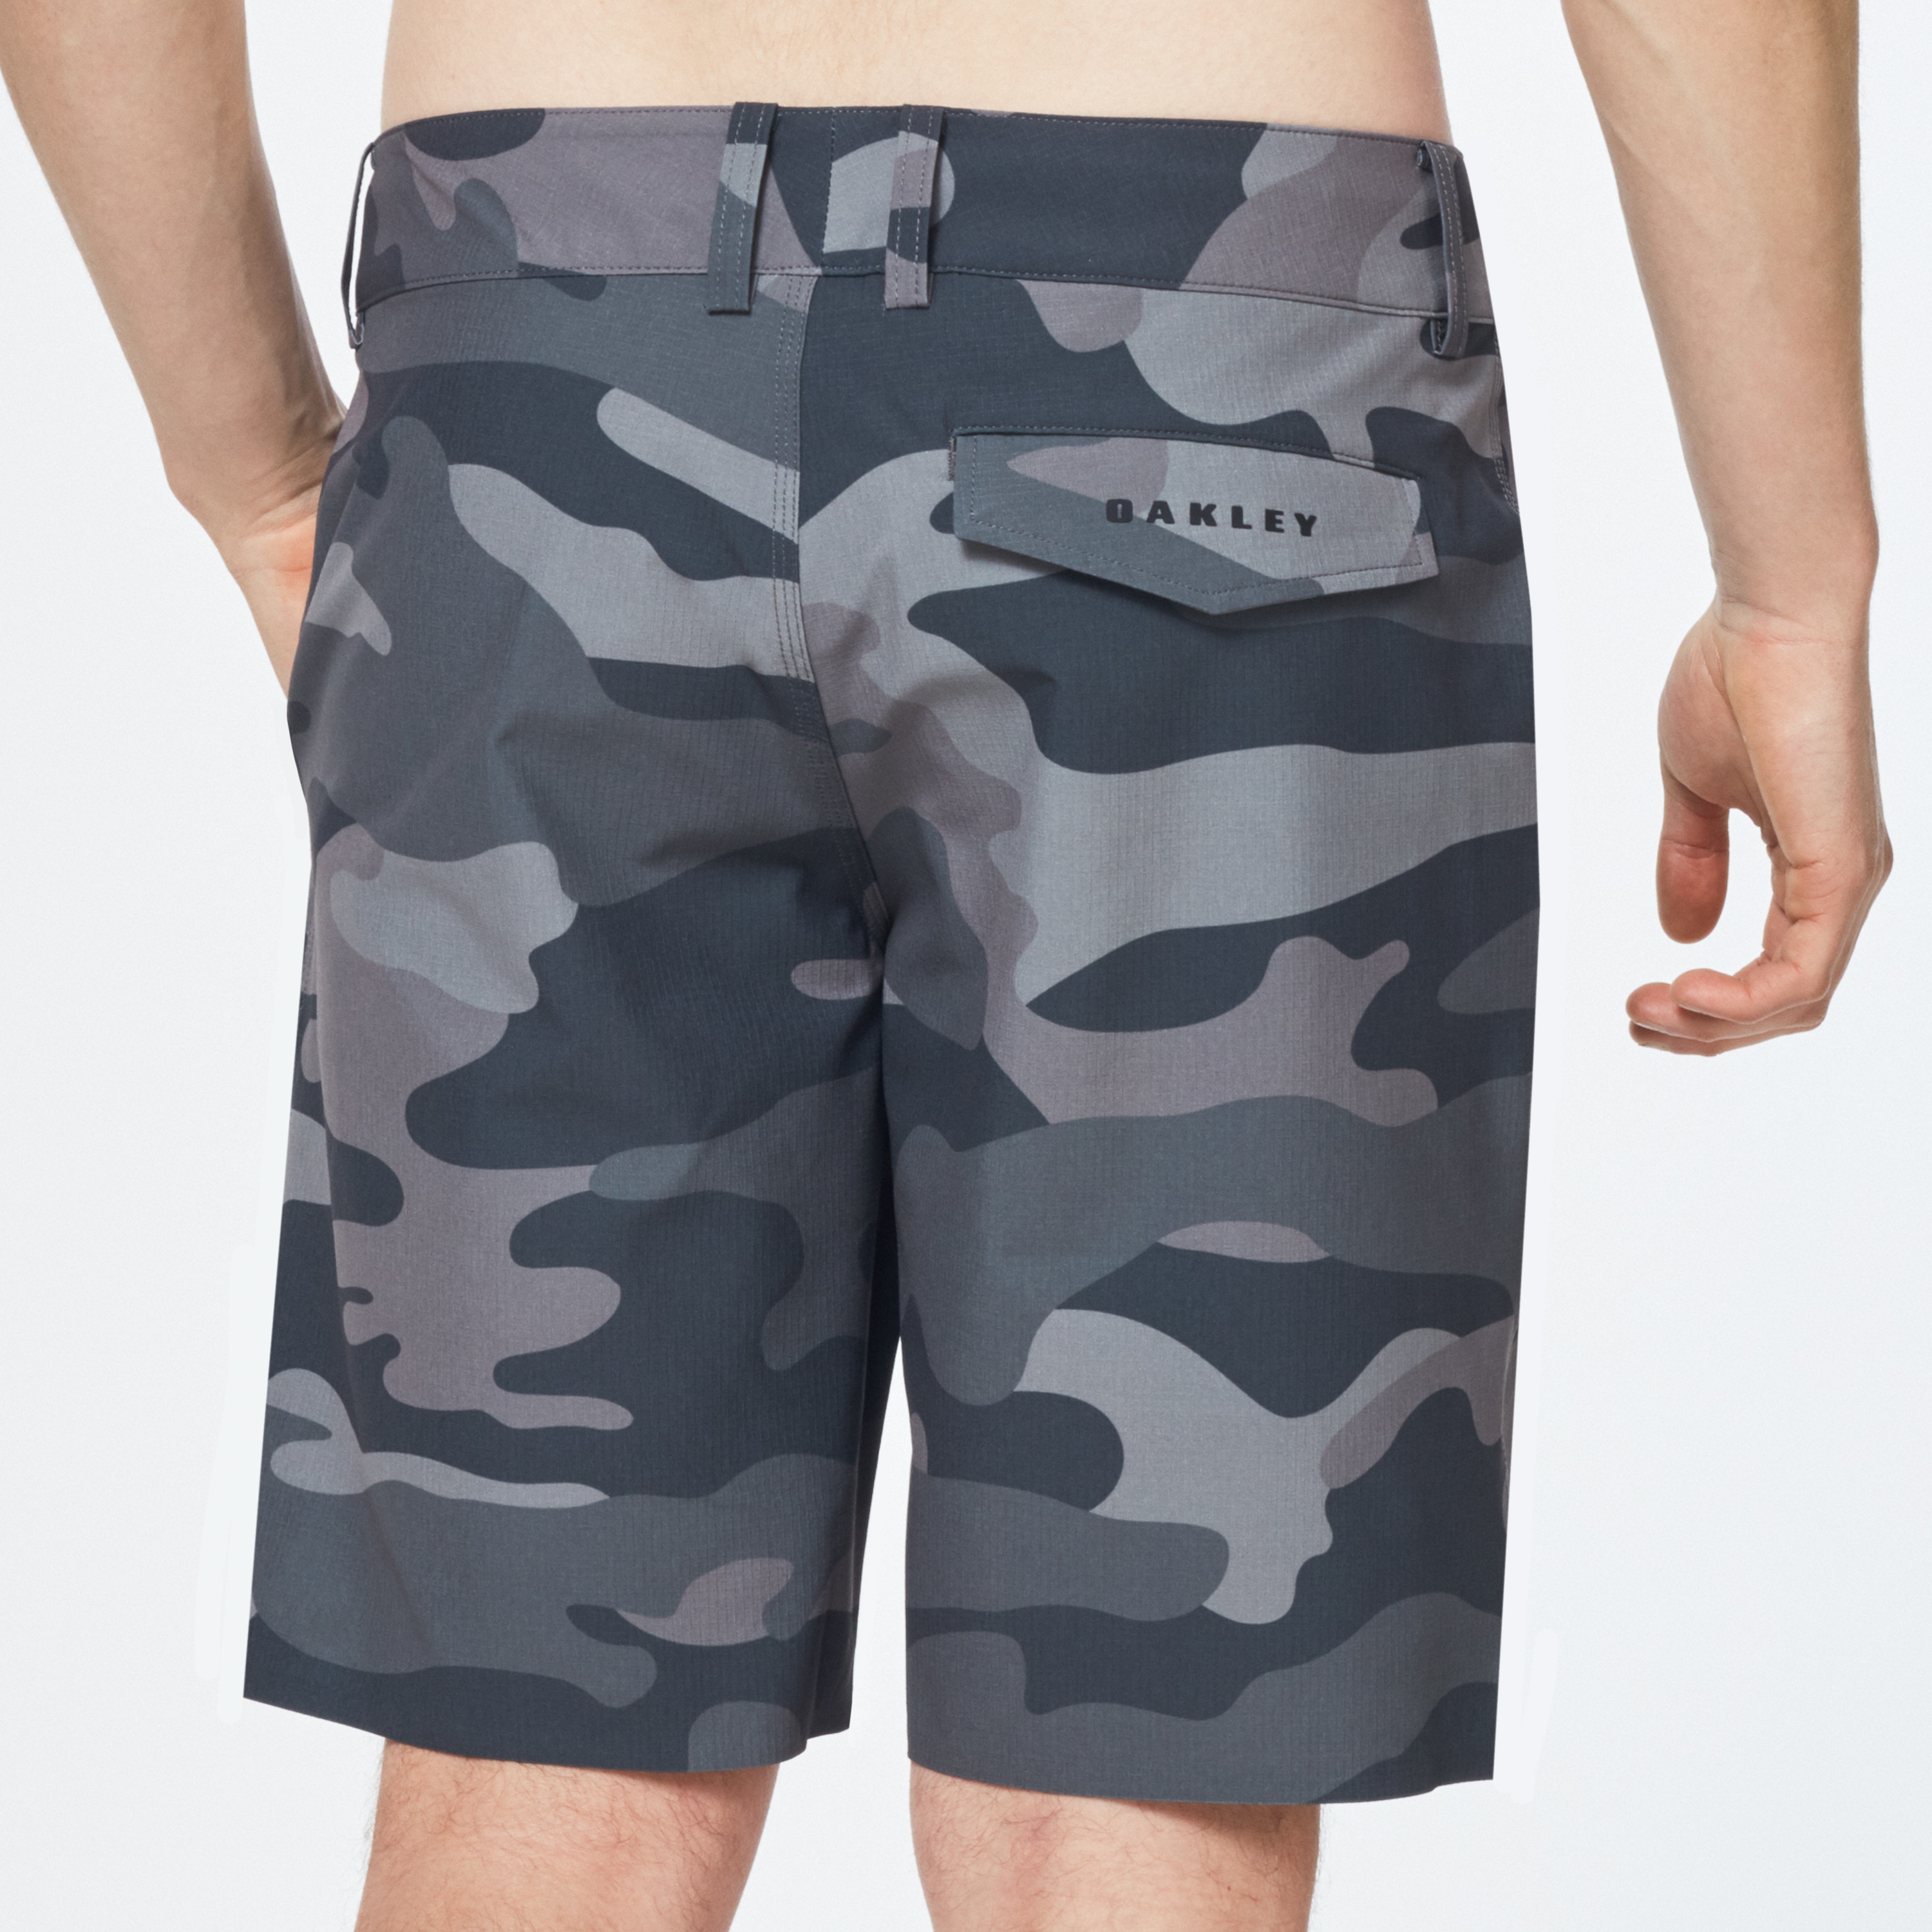 oakley camouflage shorts